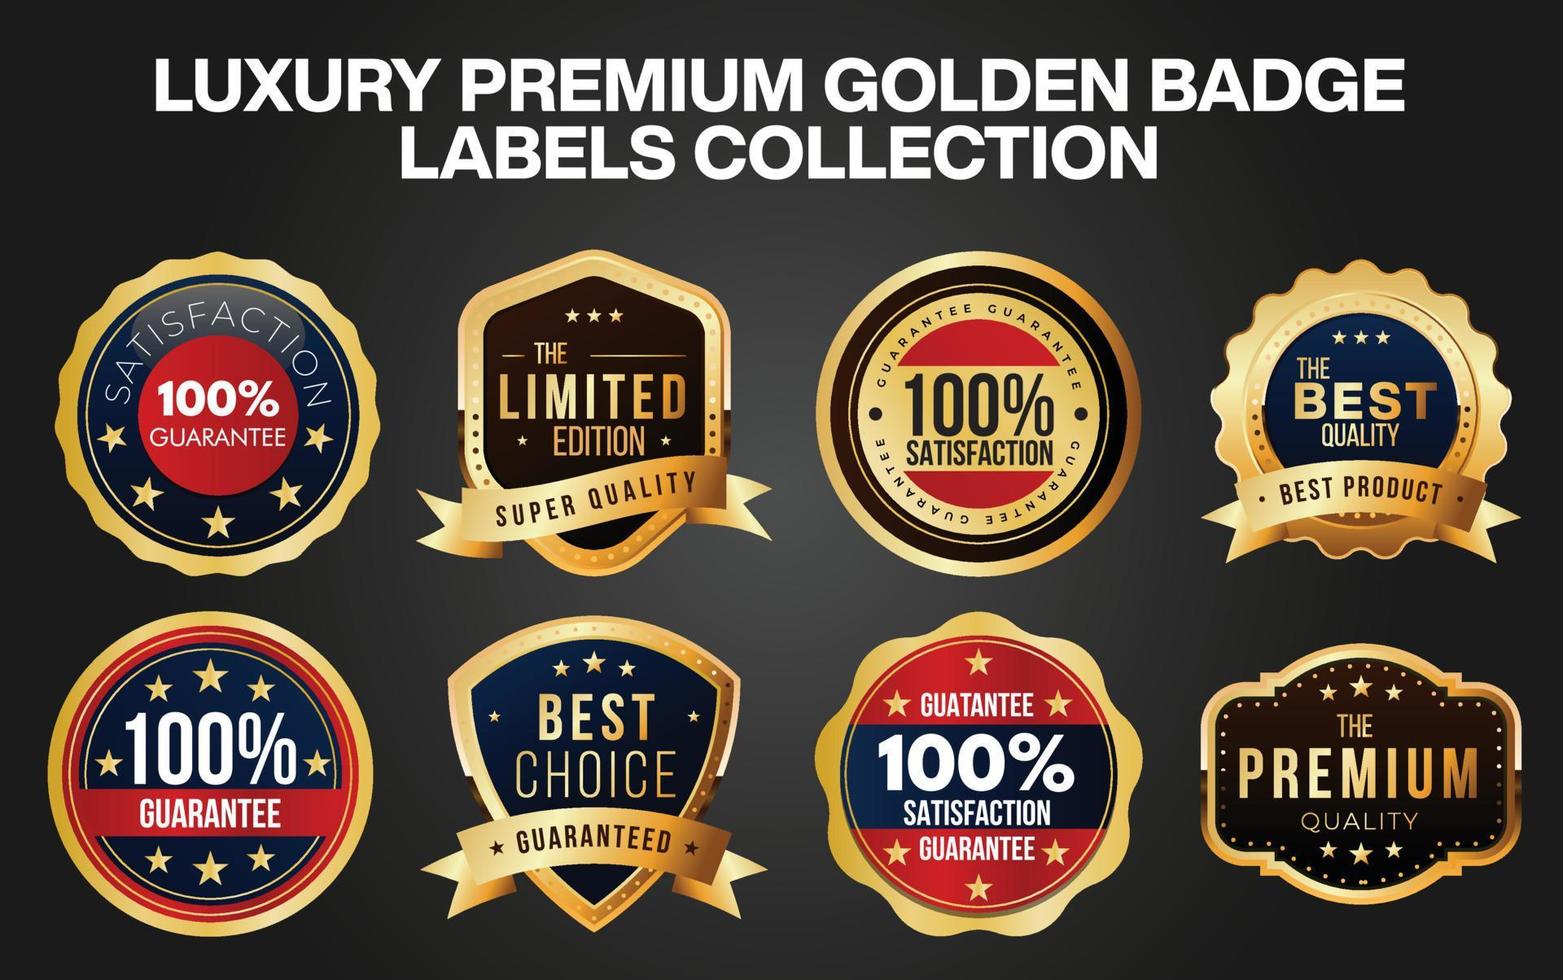 Luxury premium golden badge labels collection, vector illustration